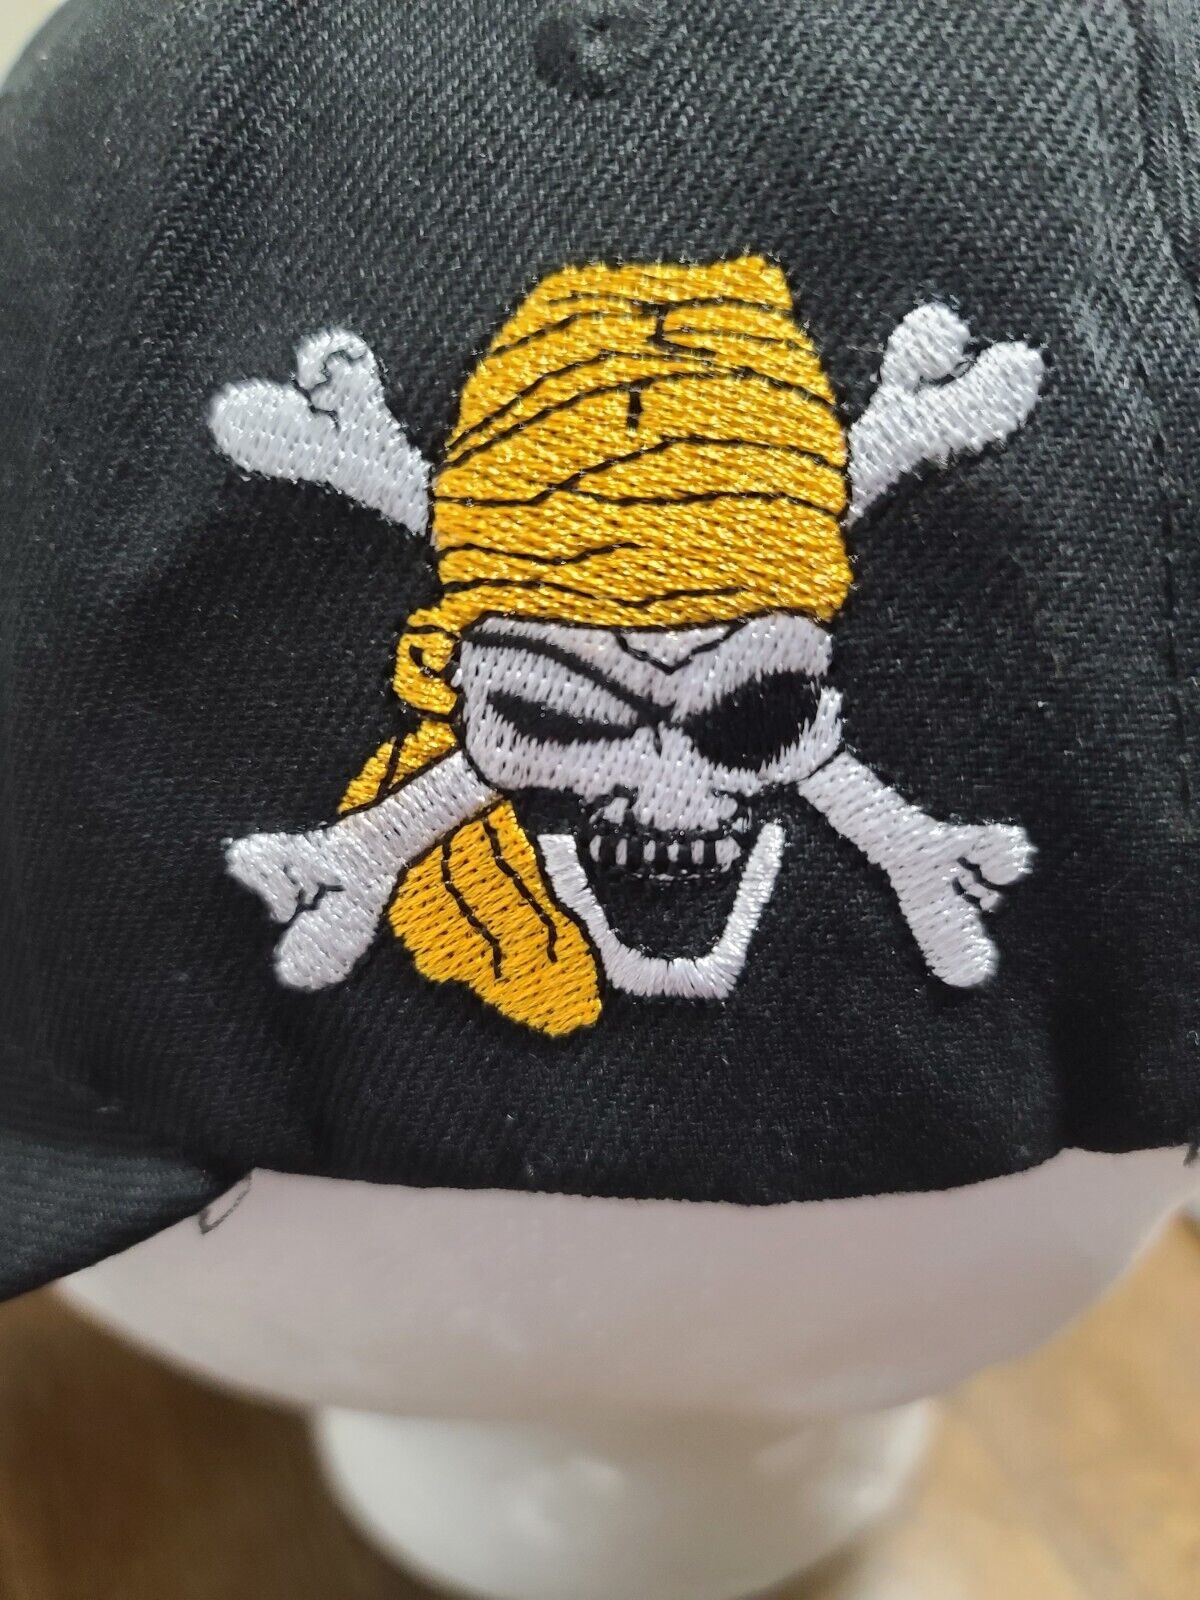 Pittsburgh Pirates Baseball cap.